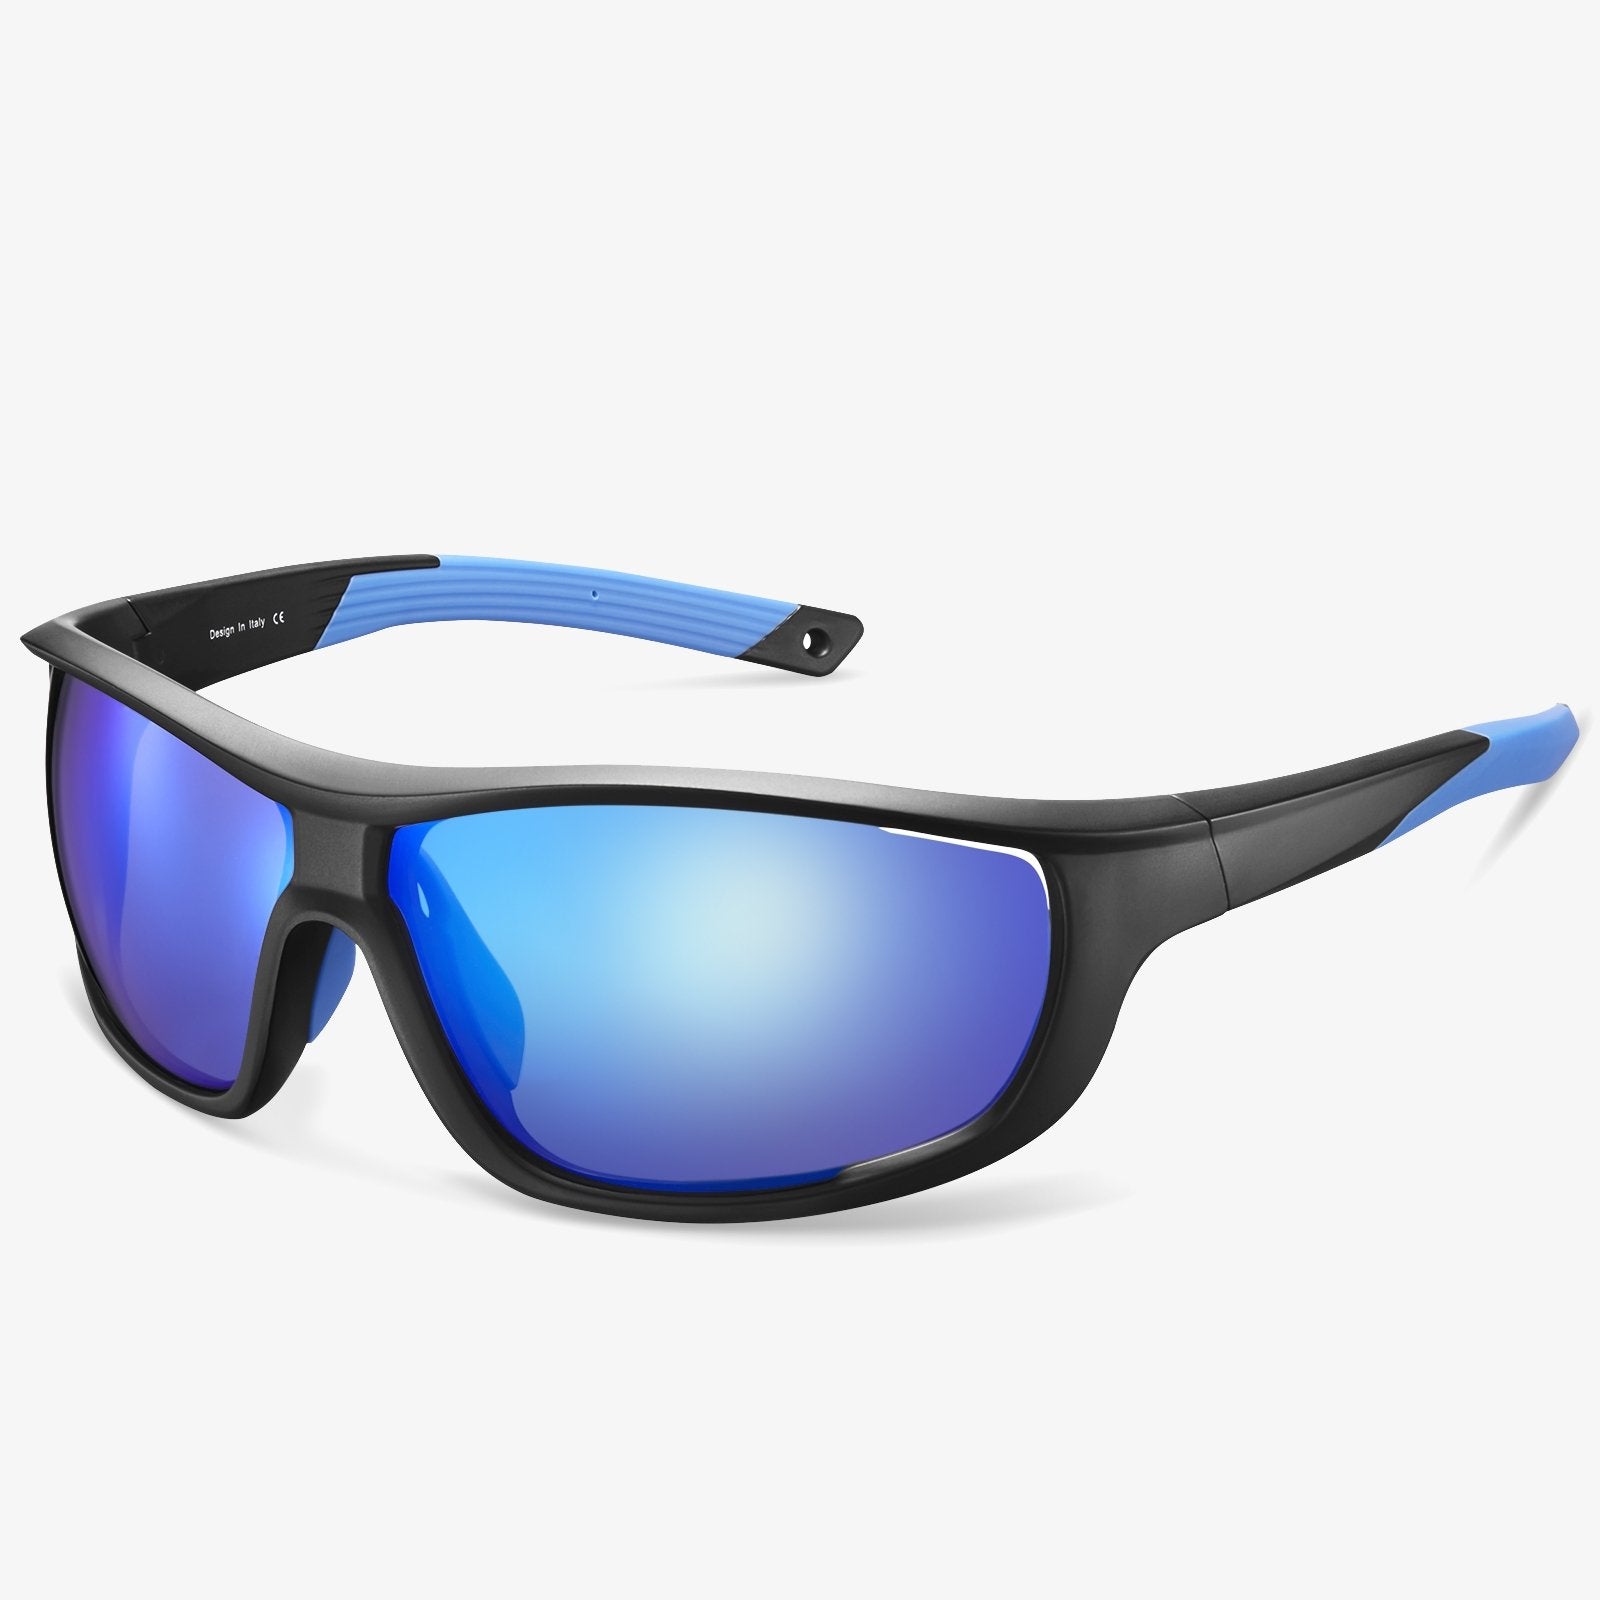 Sports Sunglasses| Sports Sunglasses Online | KOALAEYE